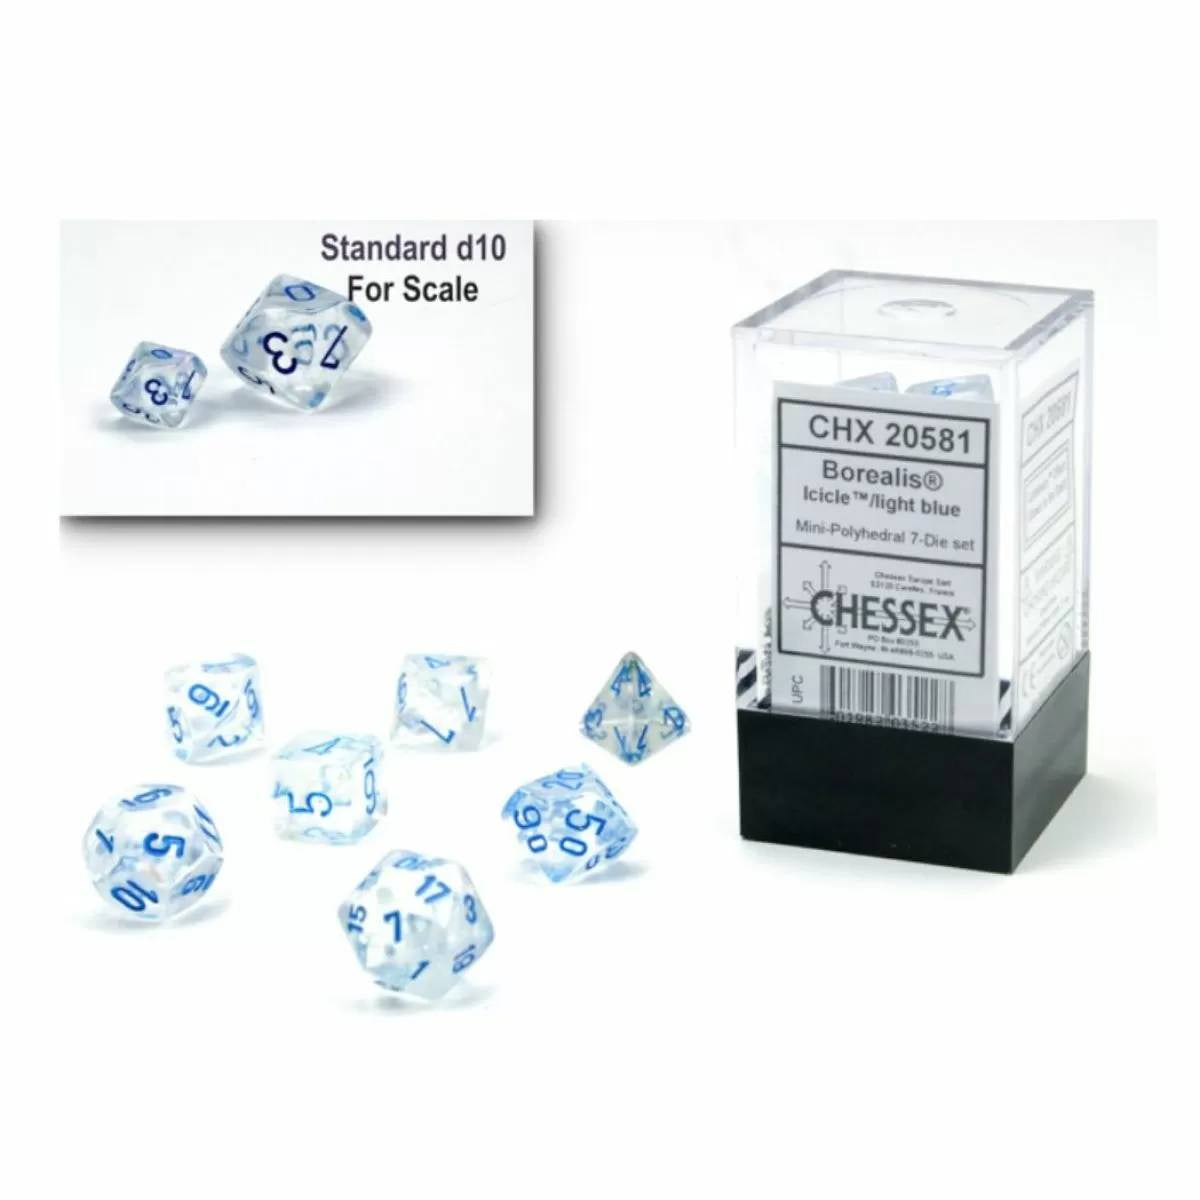 Chessex - Borealis Mini Icicle/Light Blue Luminary 7-Die Set (Chx 20581)